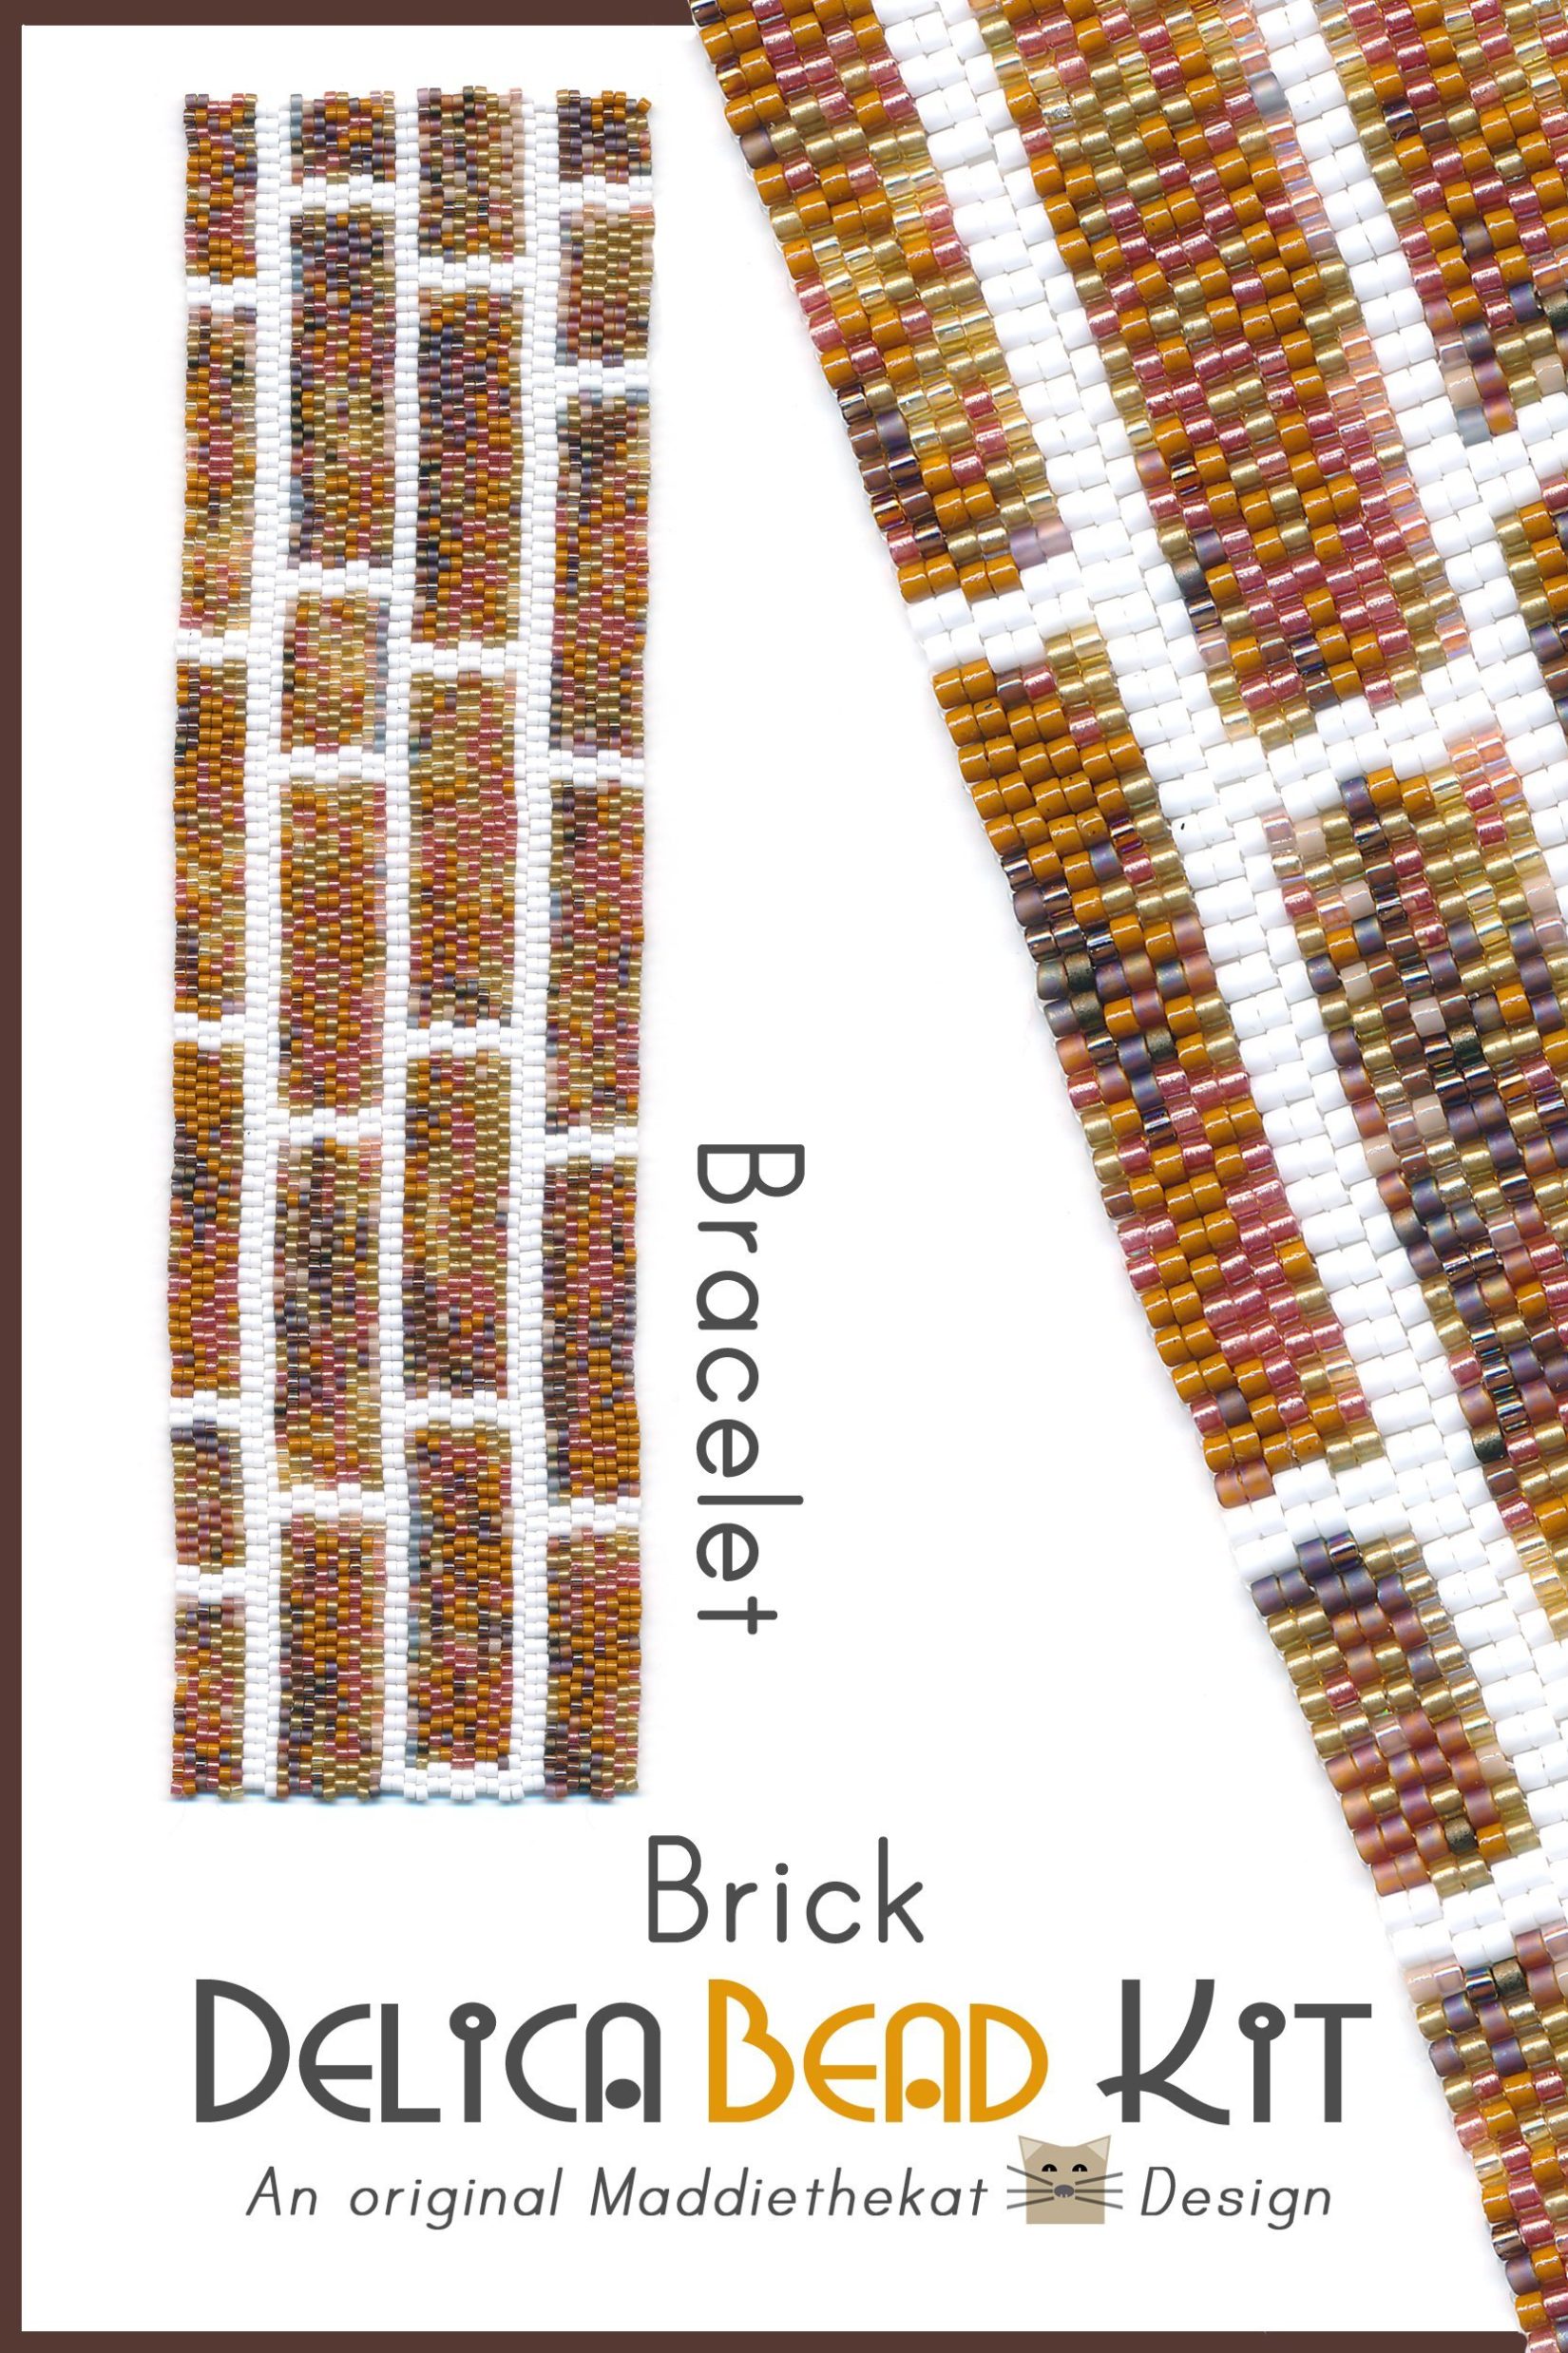 Brick Wall Wide Cuff Bracelet 2-Drop Peyote Bead Pattern or Bead Kit